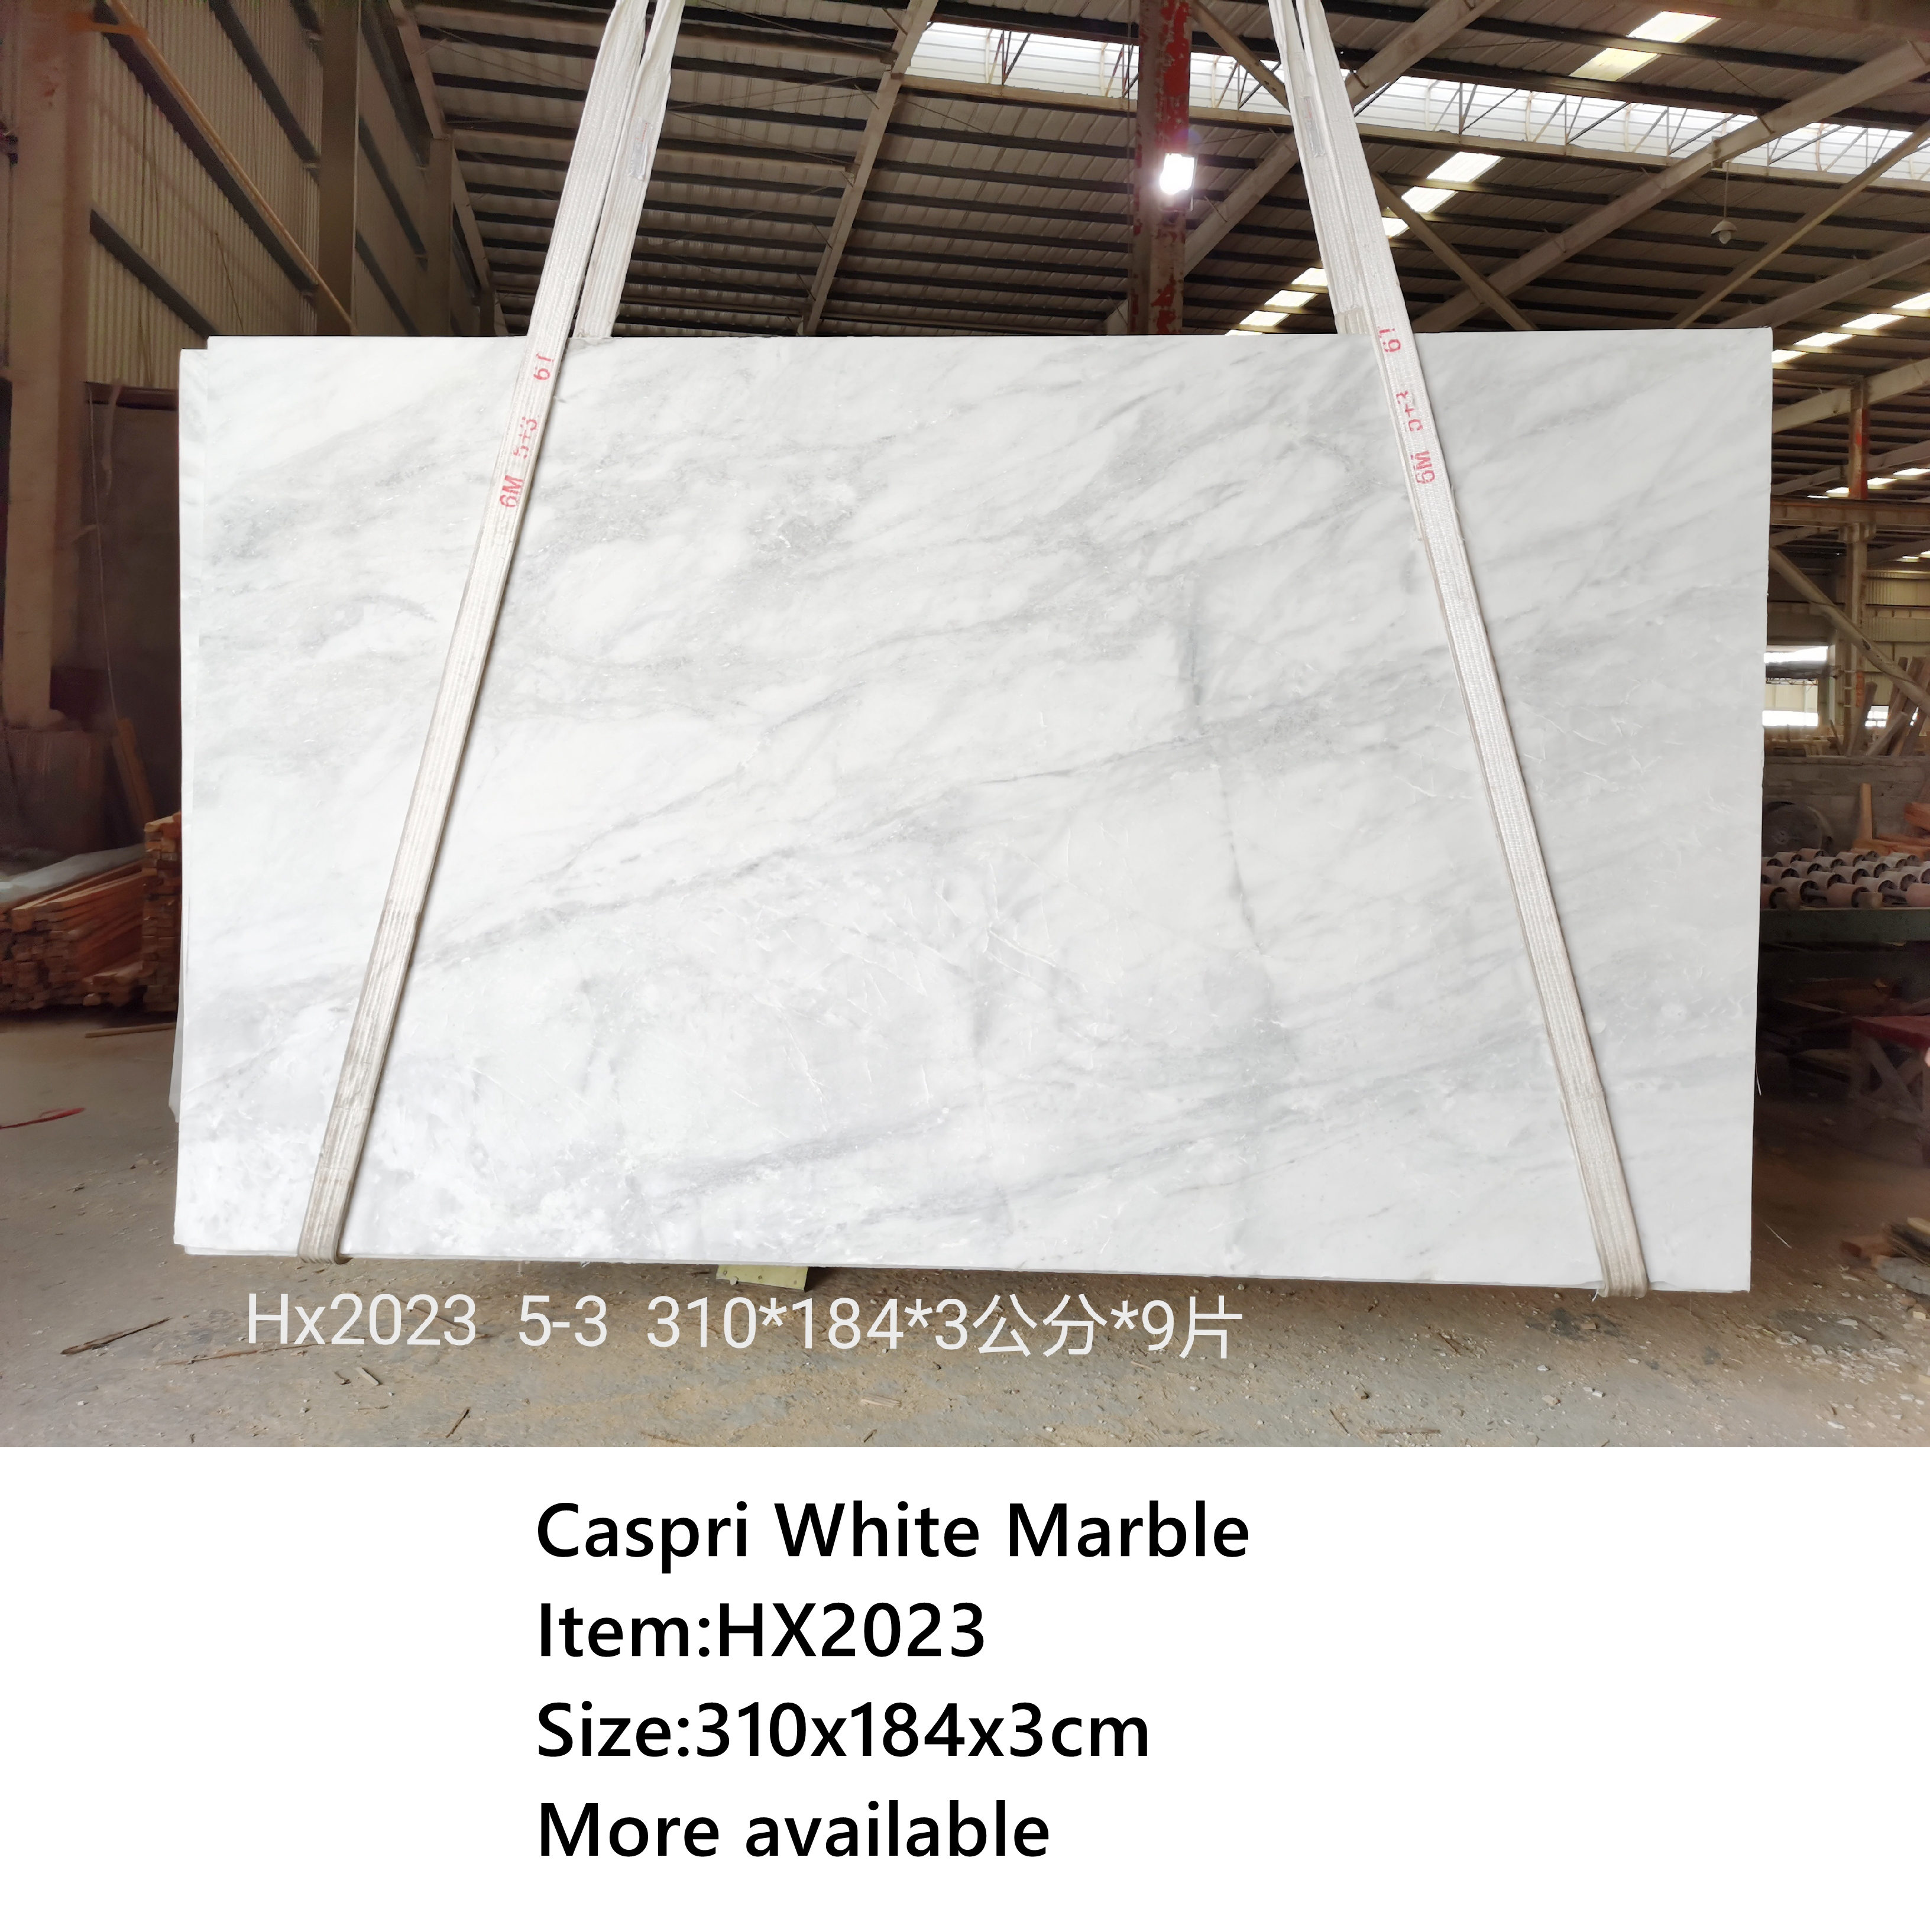 Caspri White Marble